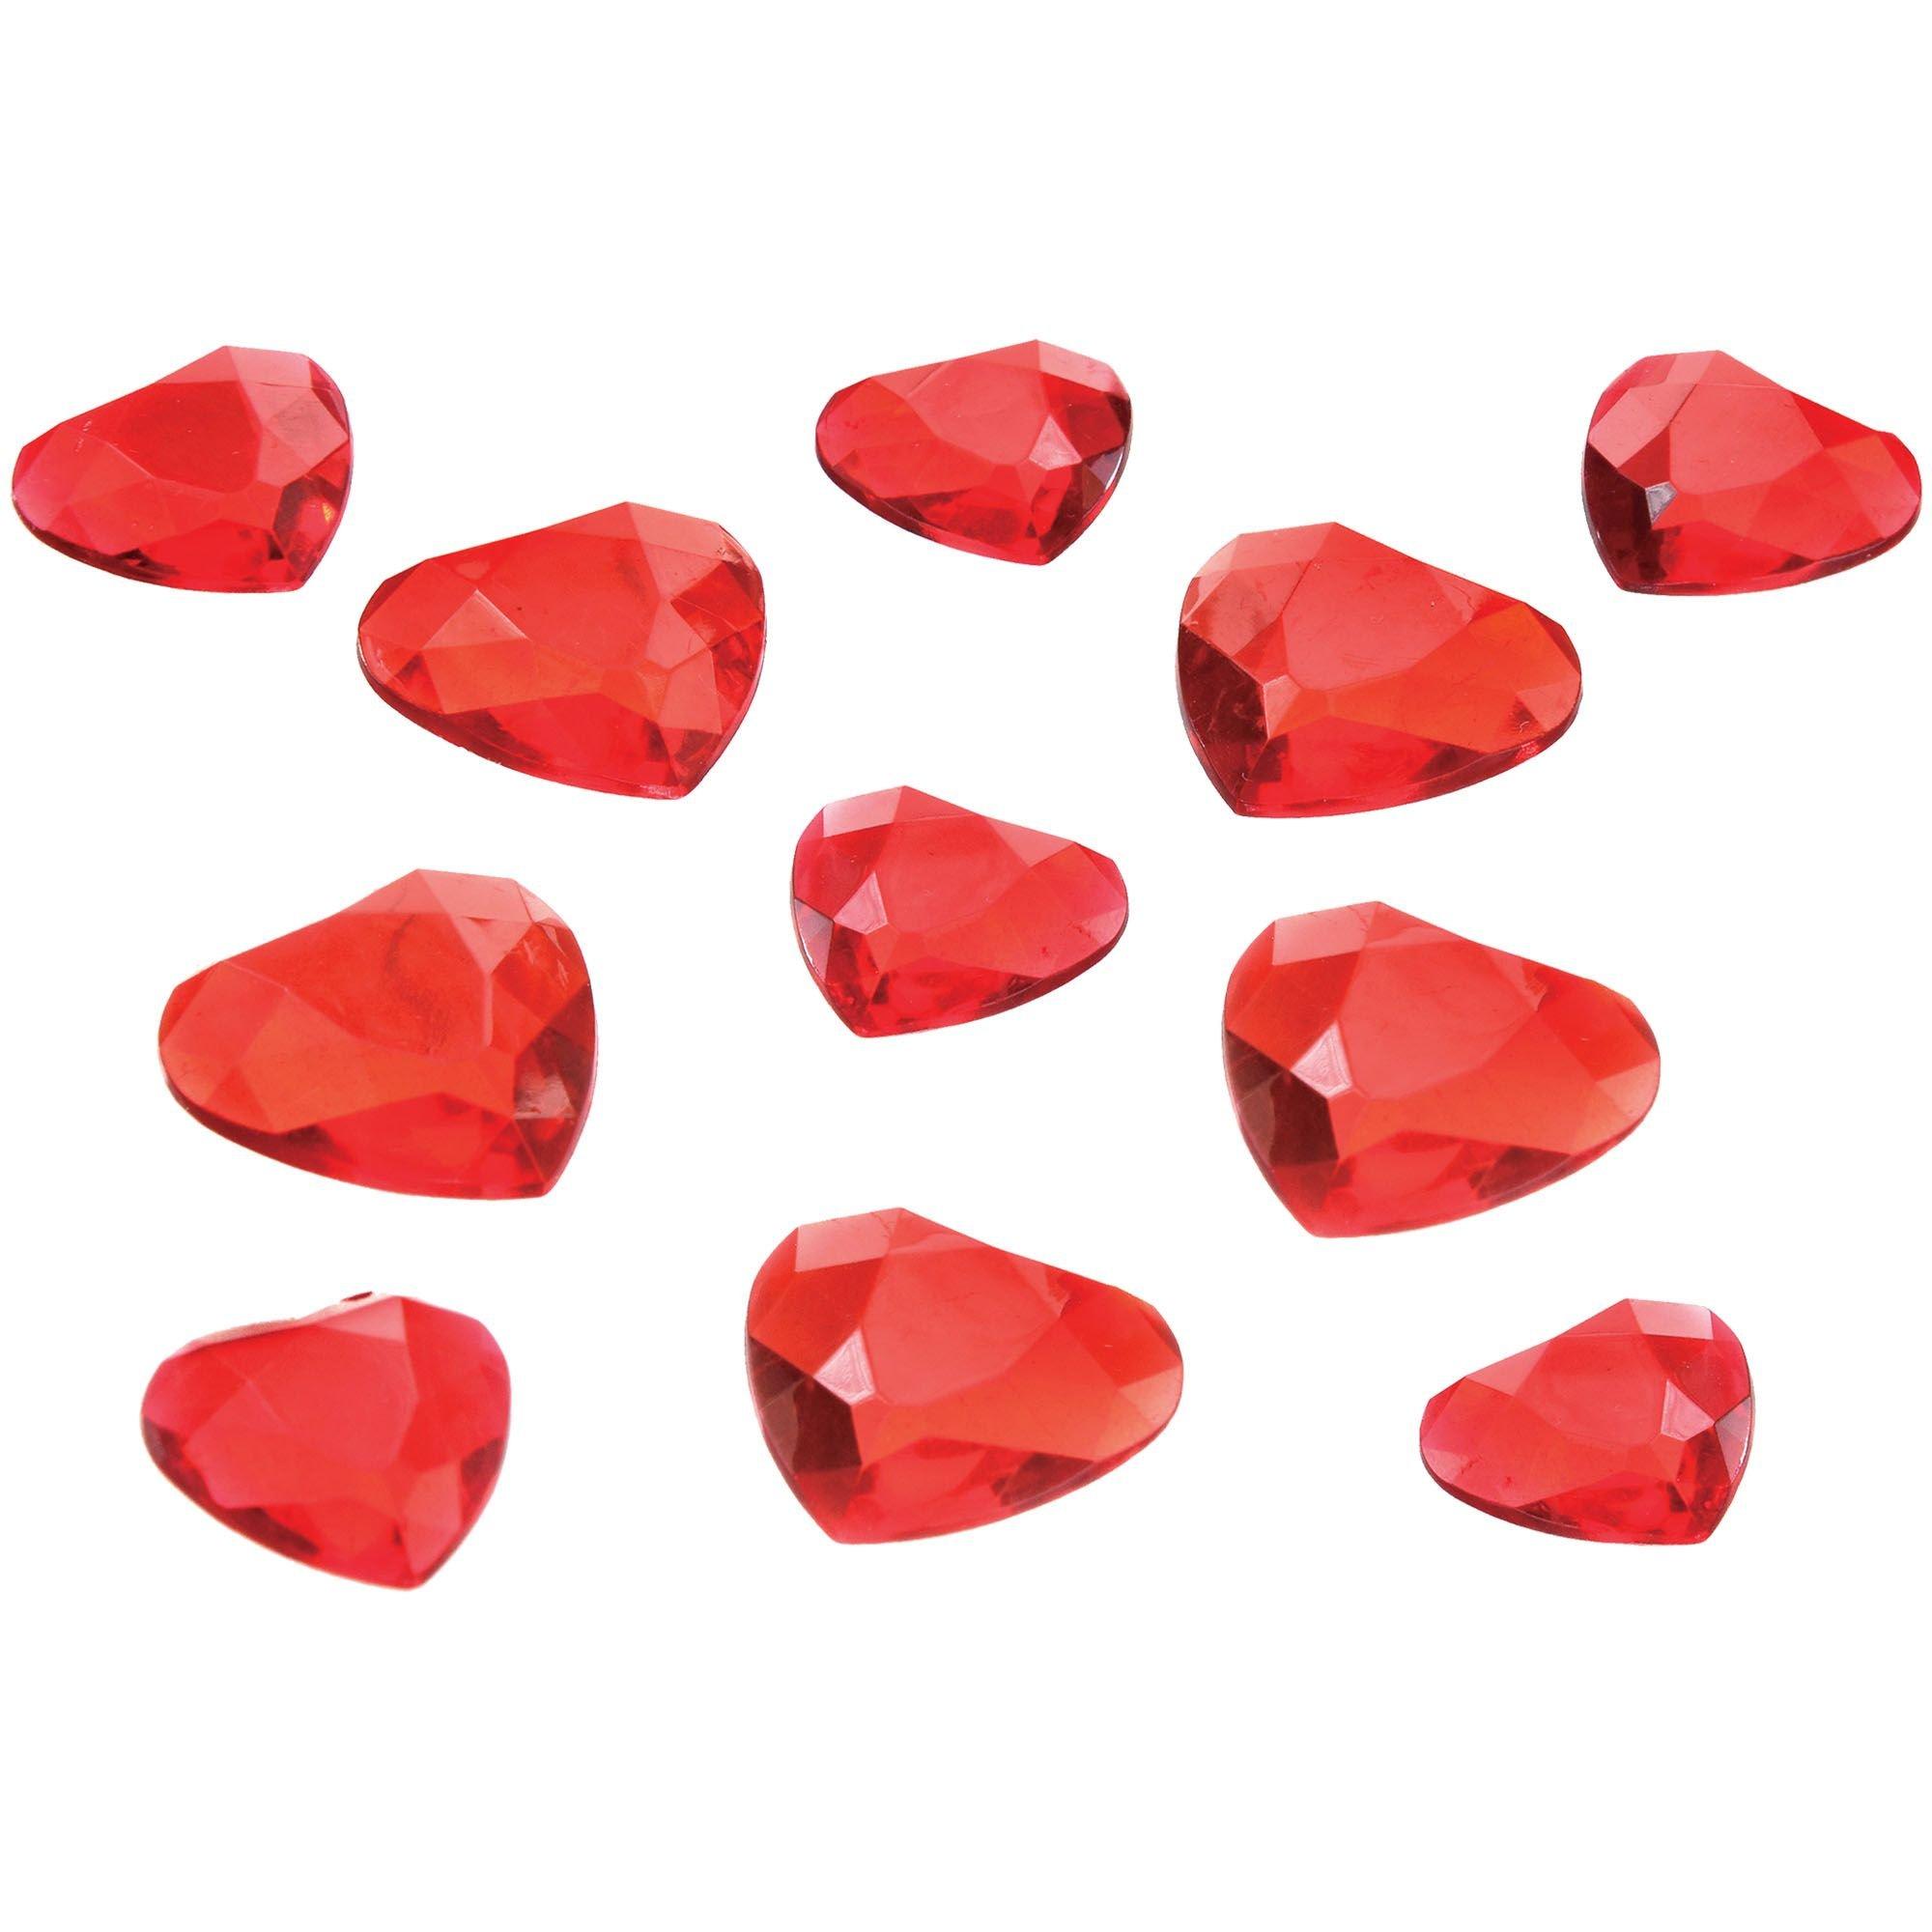 Harro Gem Custom-Cut Heart-Shaped Moissanite Gemstone – deBebians